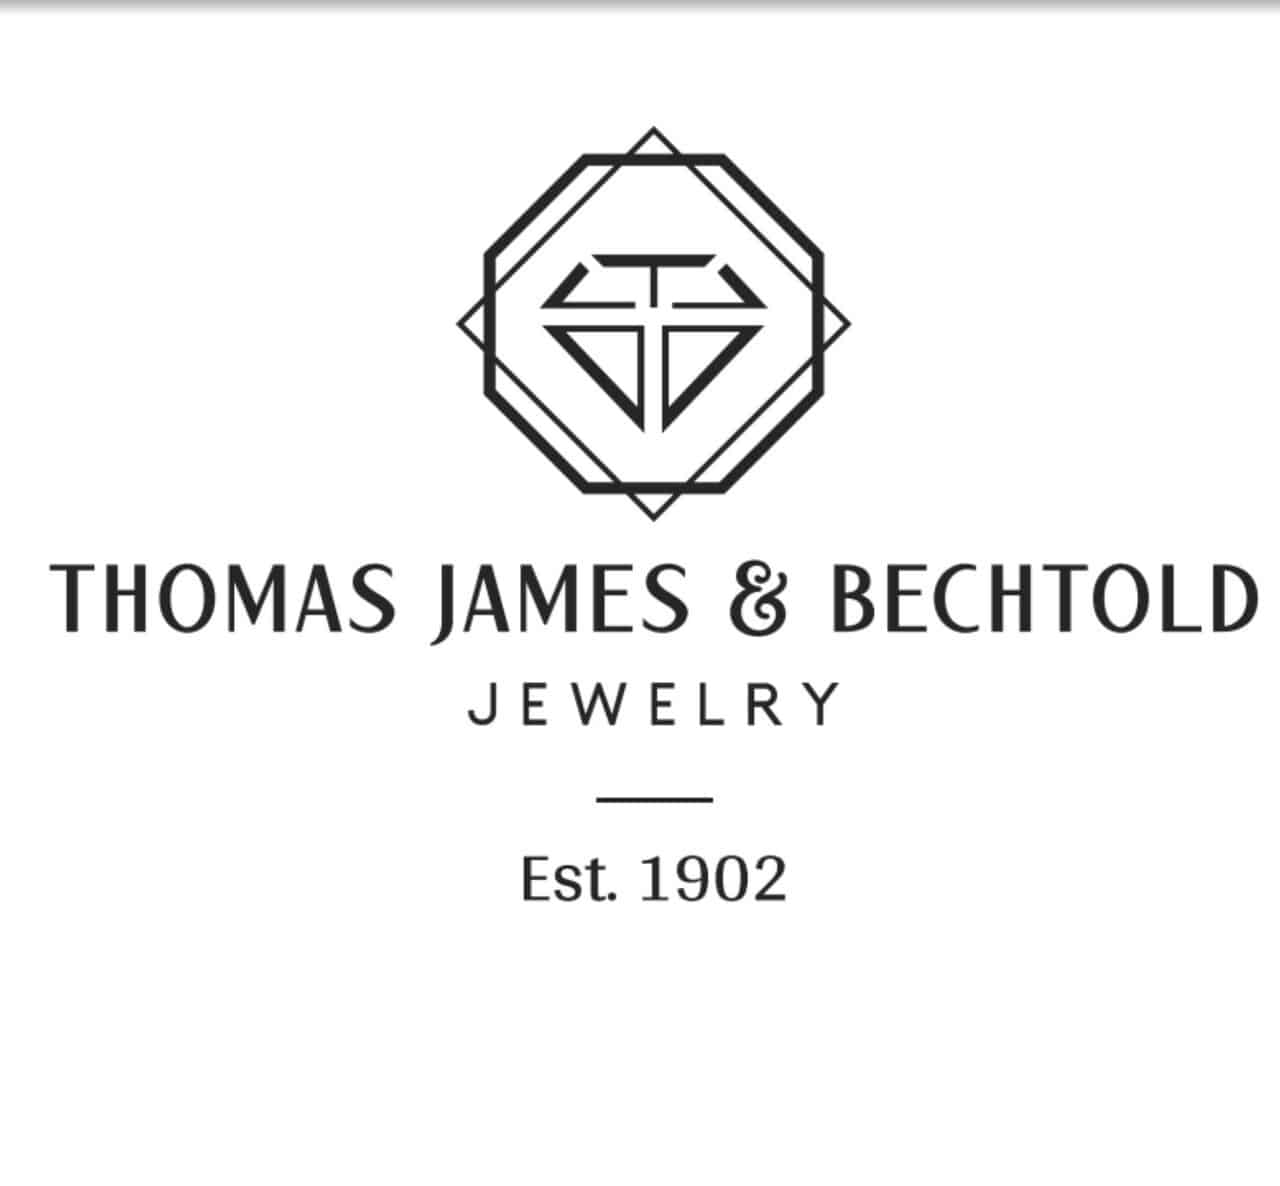 Thomas James & Bechtold Jewelry